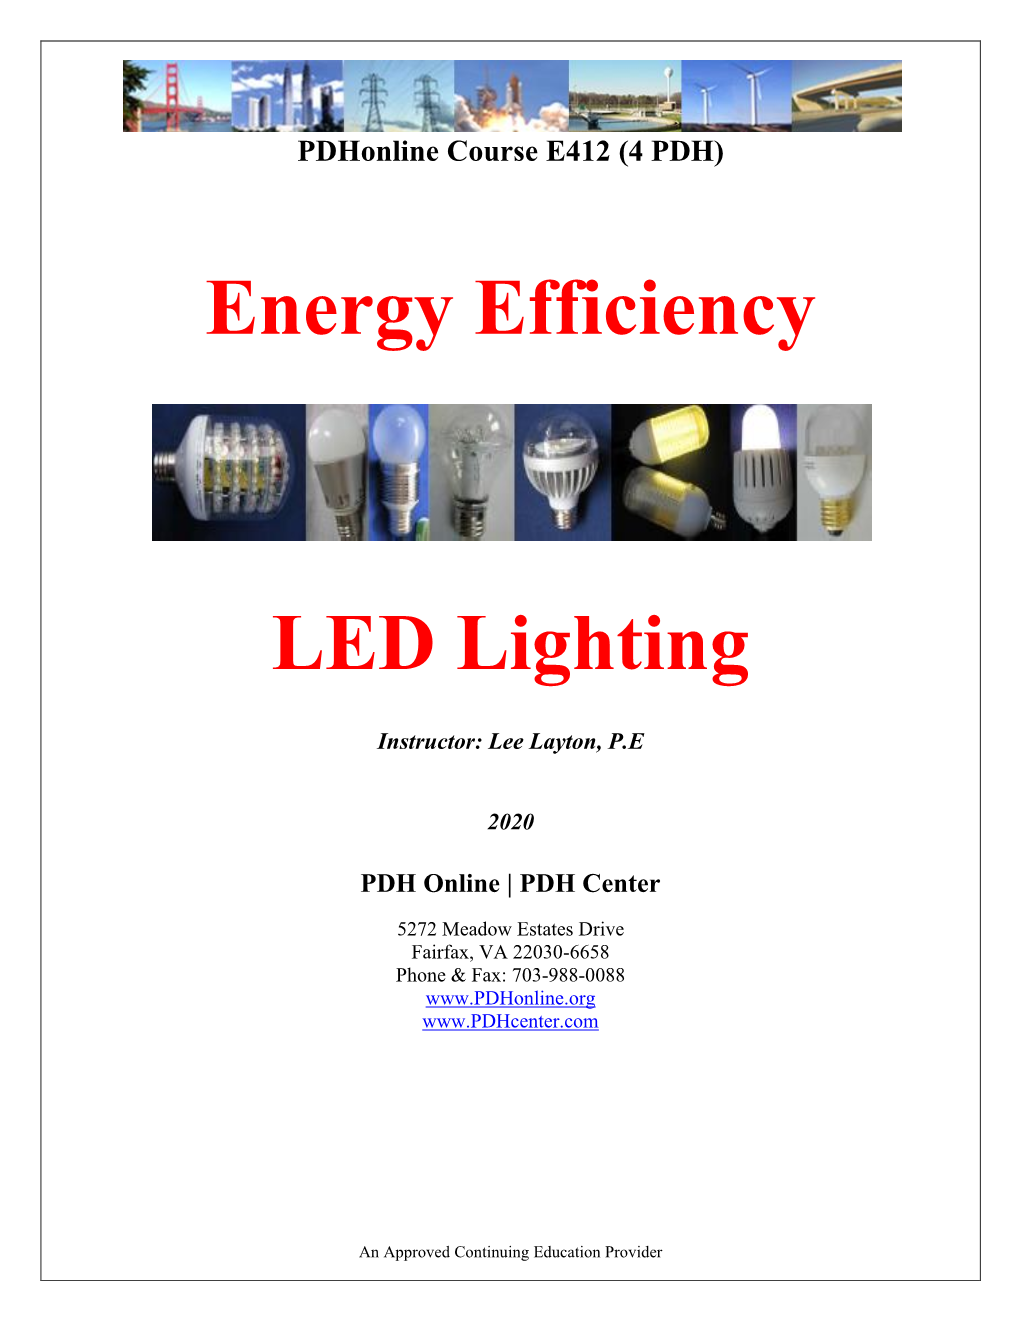 Energy Efficiency LED Lighting